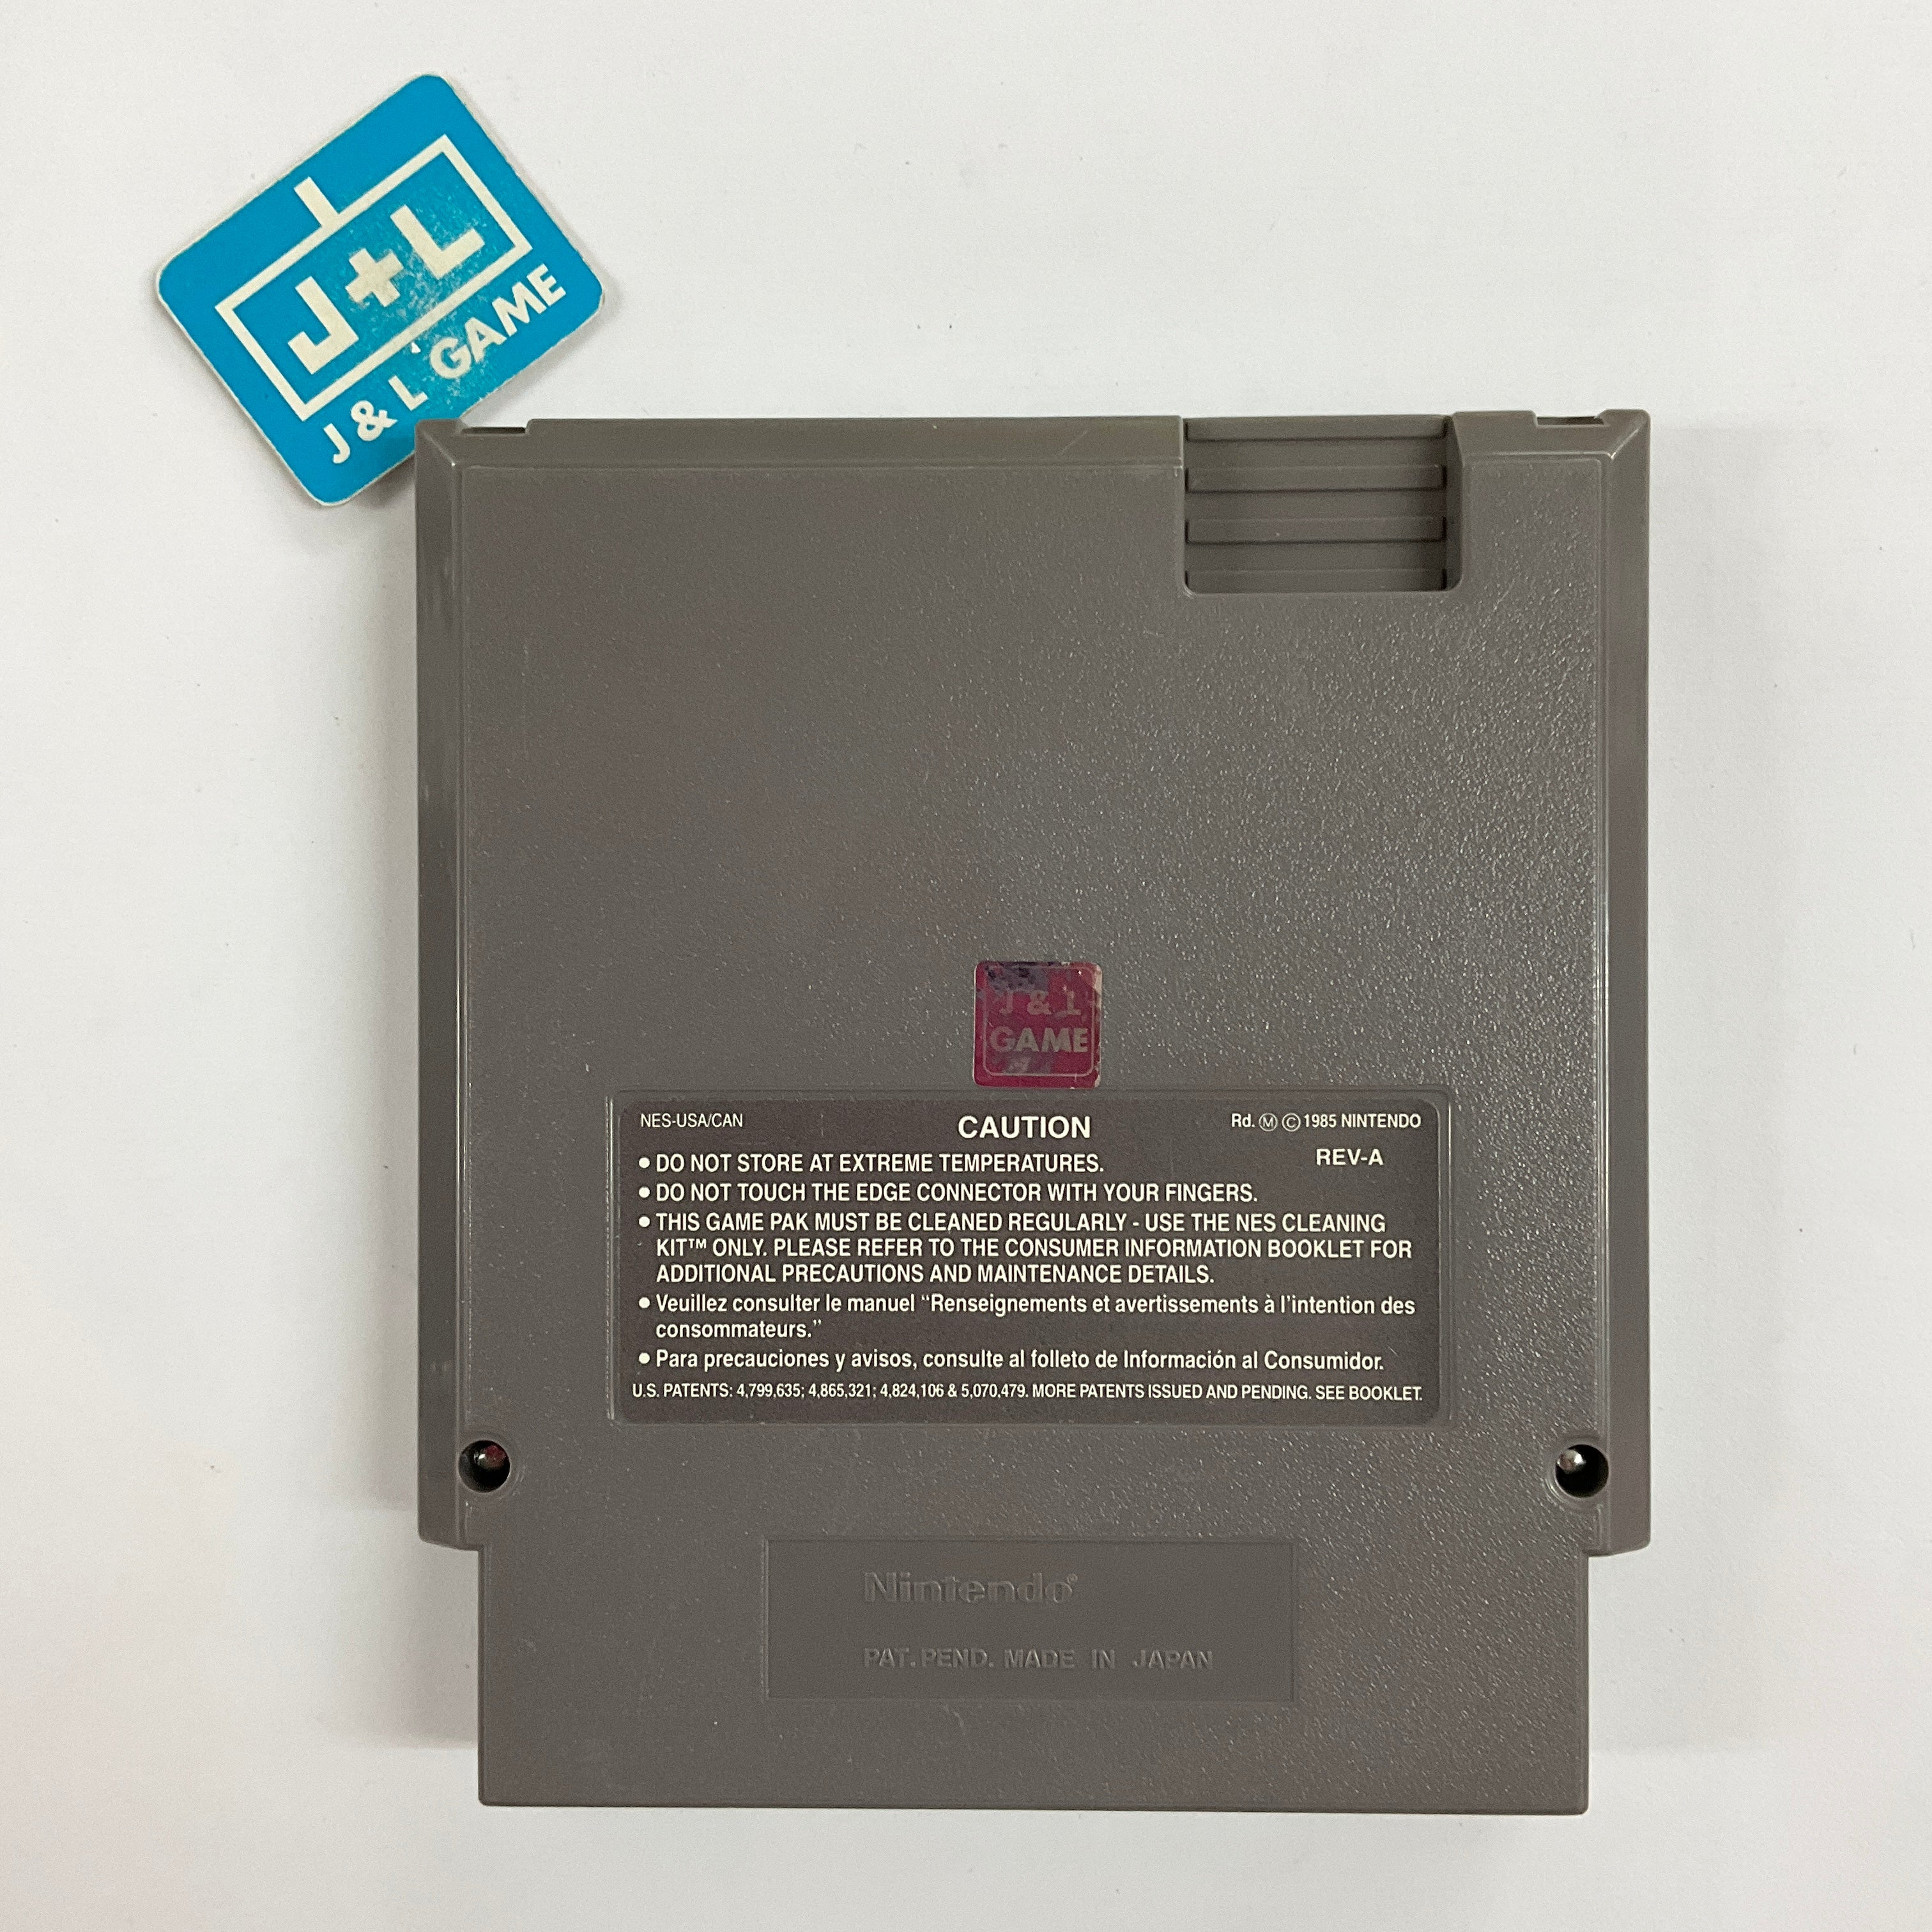 Contra Force - (NES) Nintendo Entertainment System [Pre-Owned] Video Games Konami   